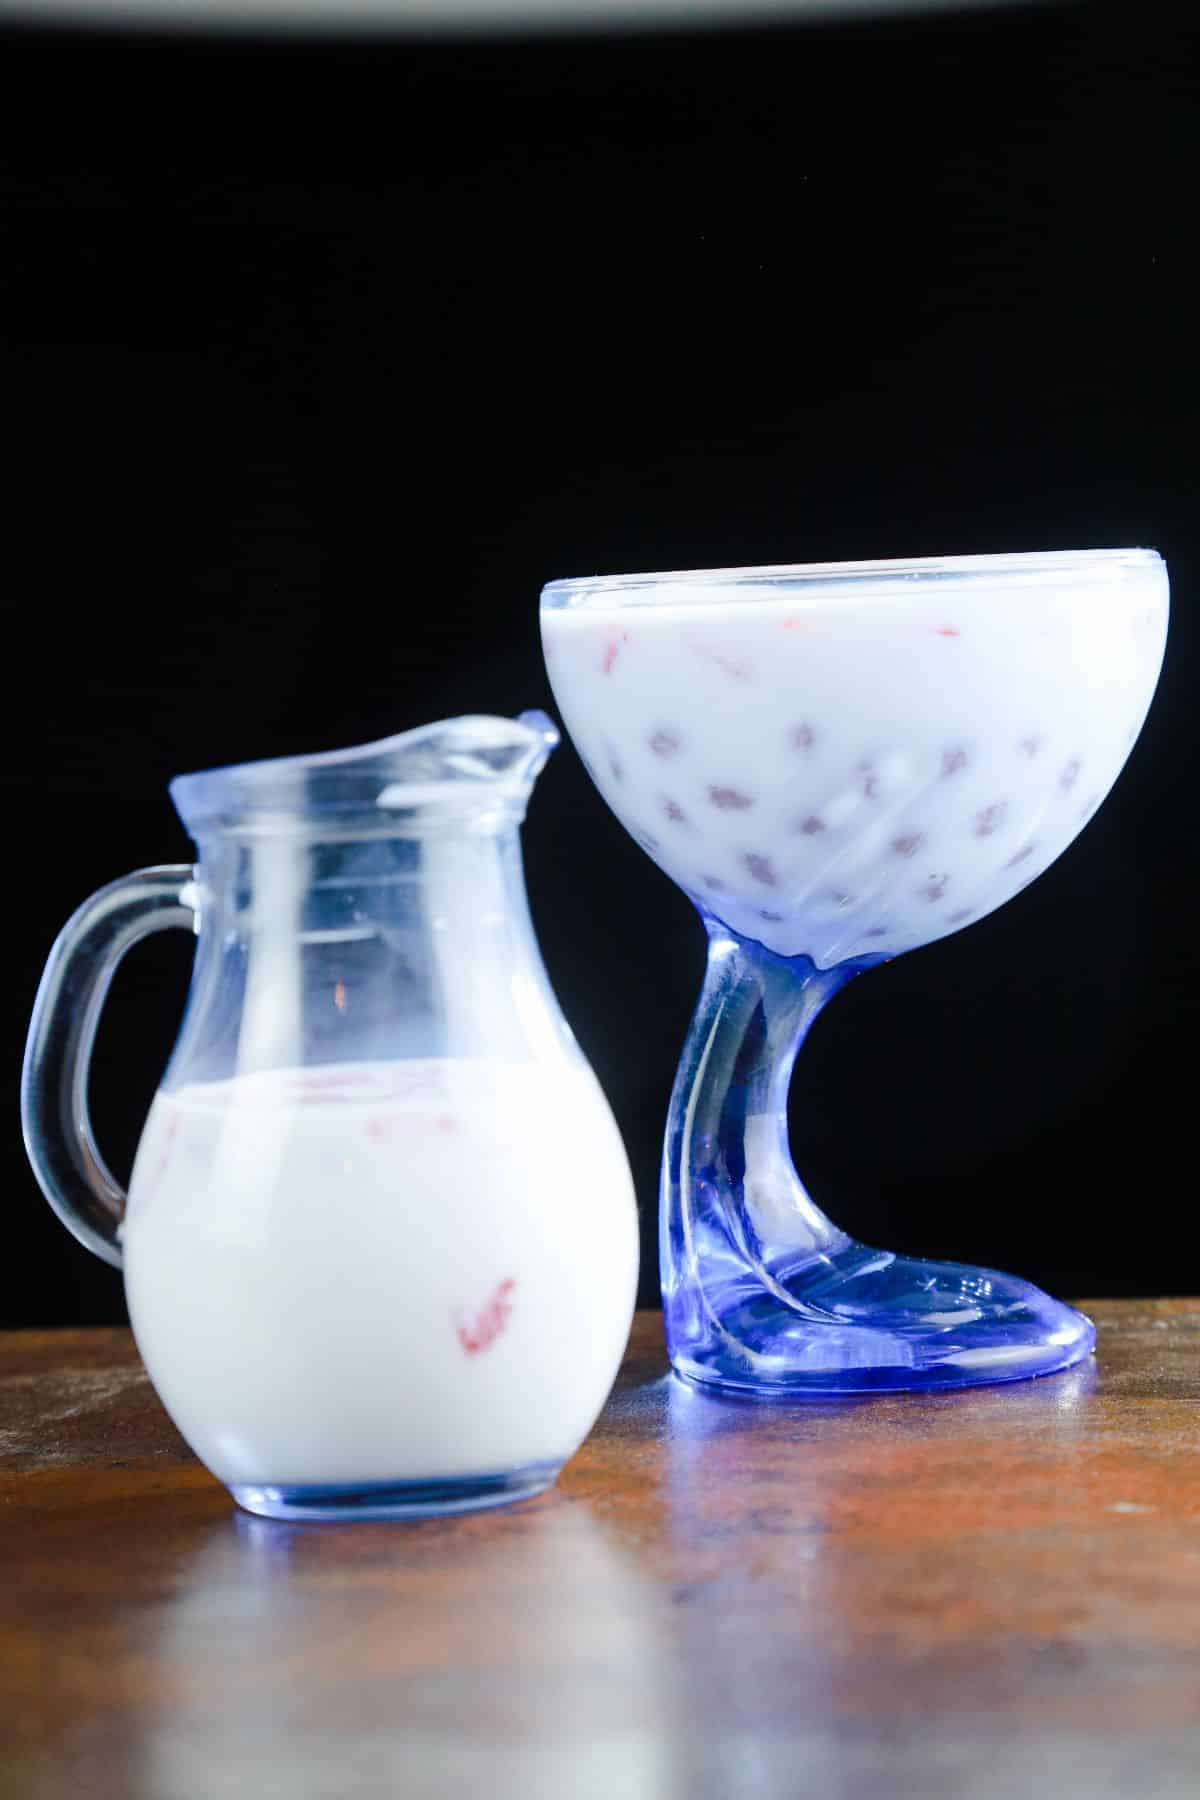 blue glass of strawberry boba milk with black background